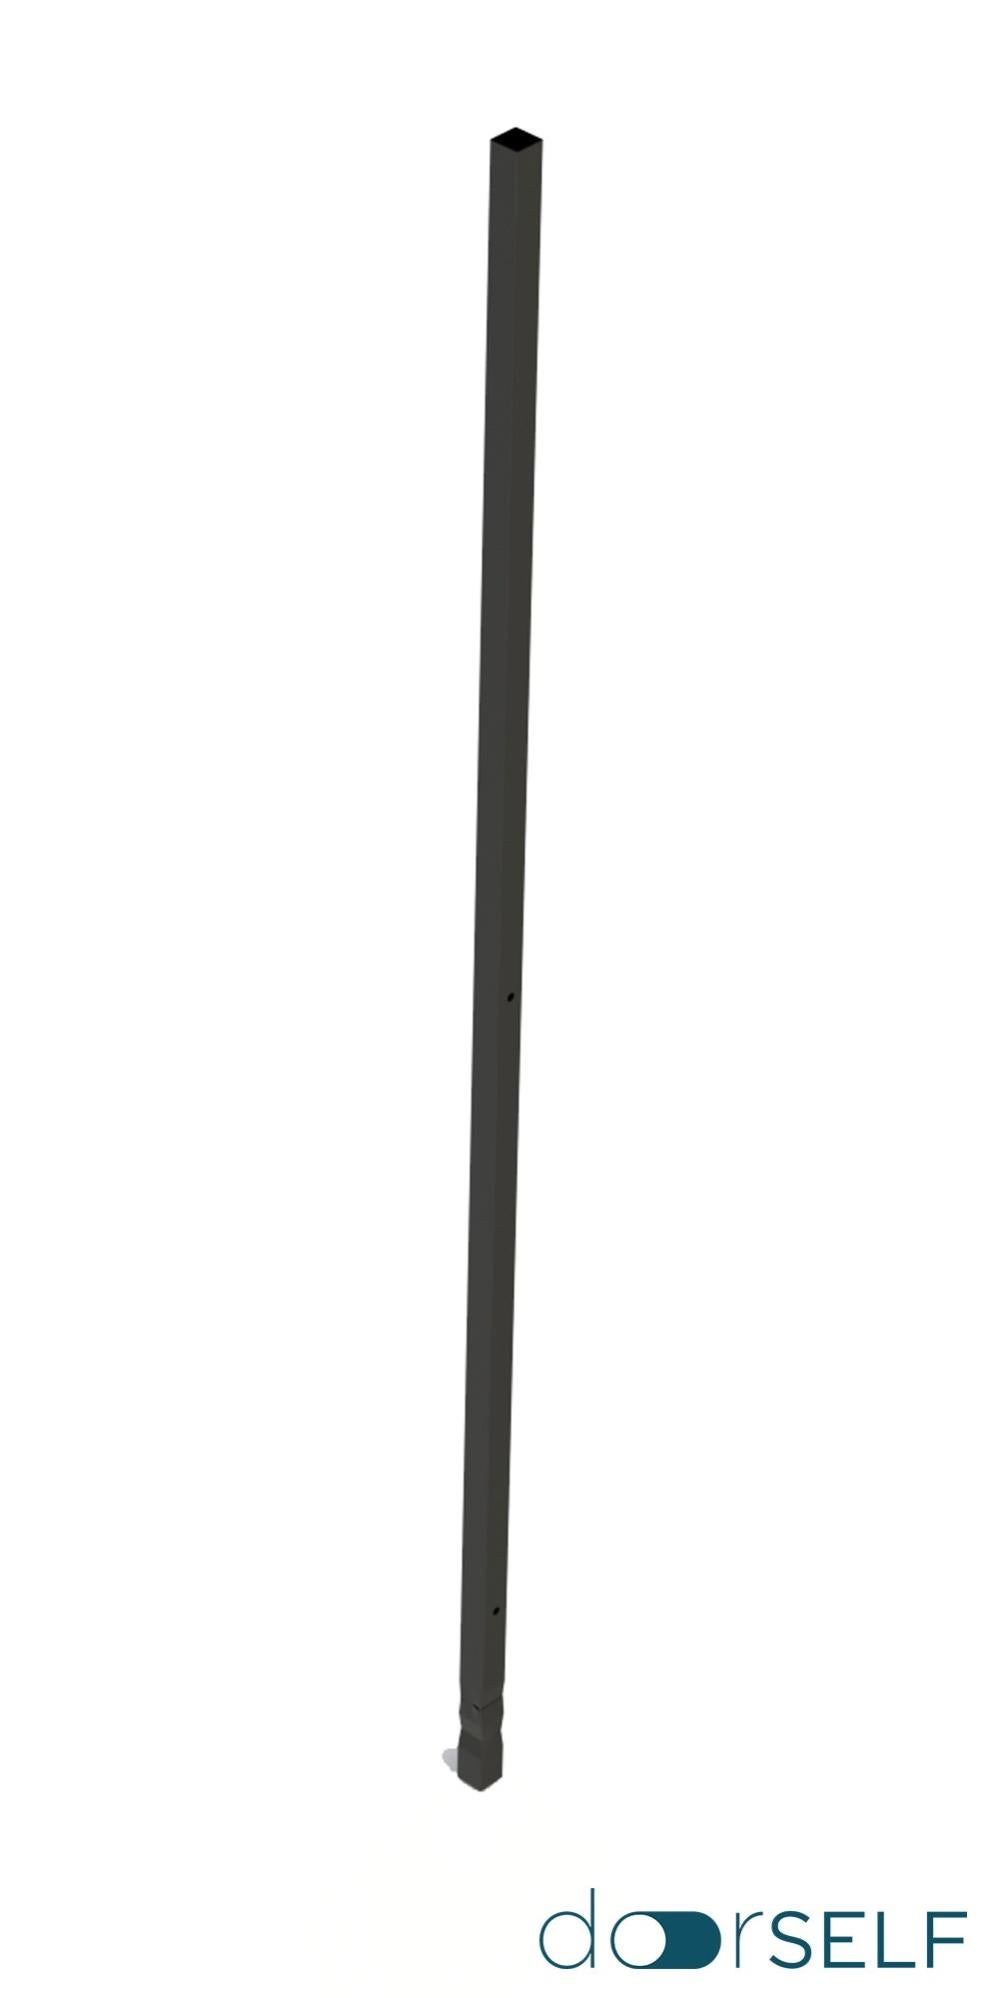 Poste de encastrar para valla de acero negro de 4 x 4 x 22 cm